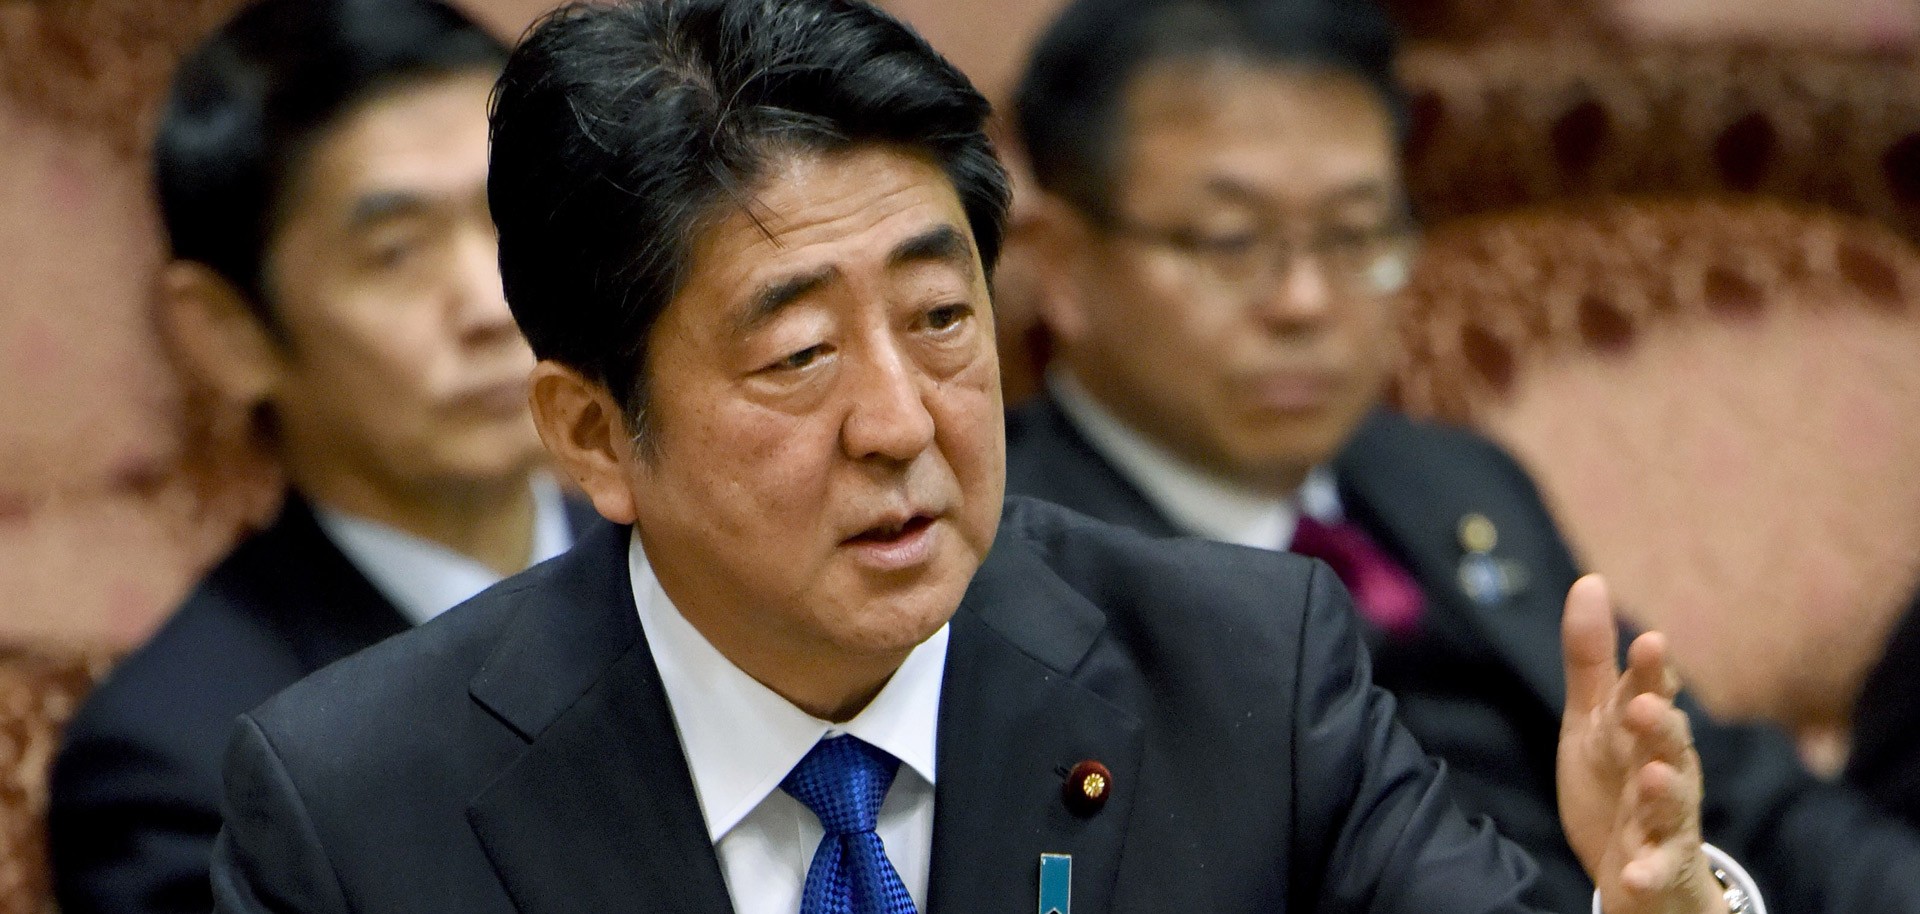 Japanese Prime Minister Shinzo Abe's Abenomics reforms have made progress